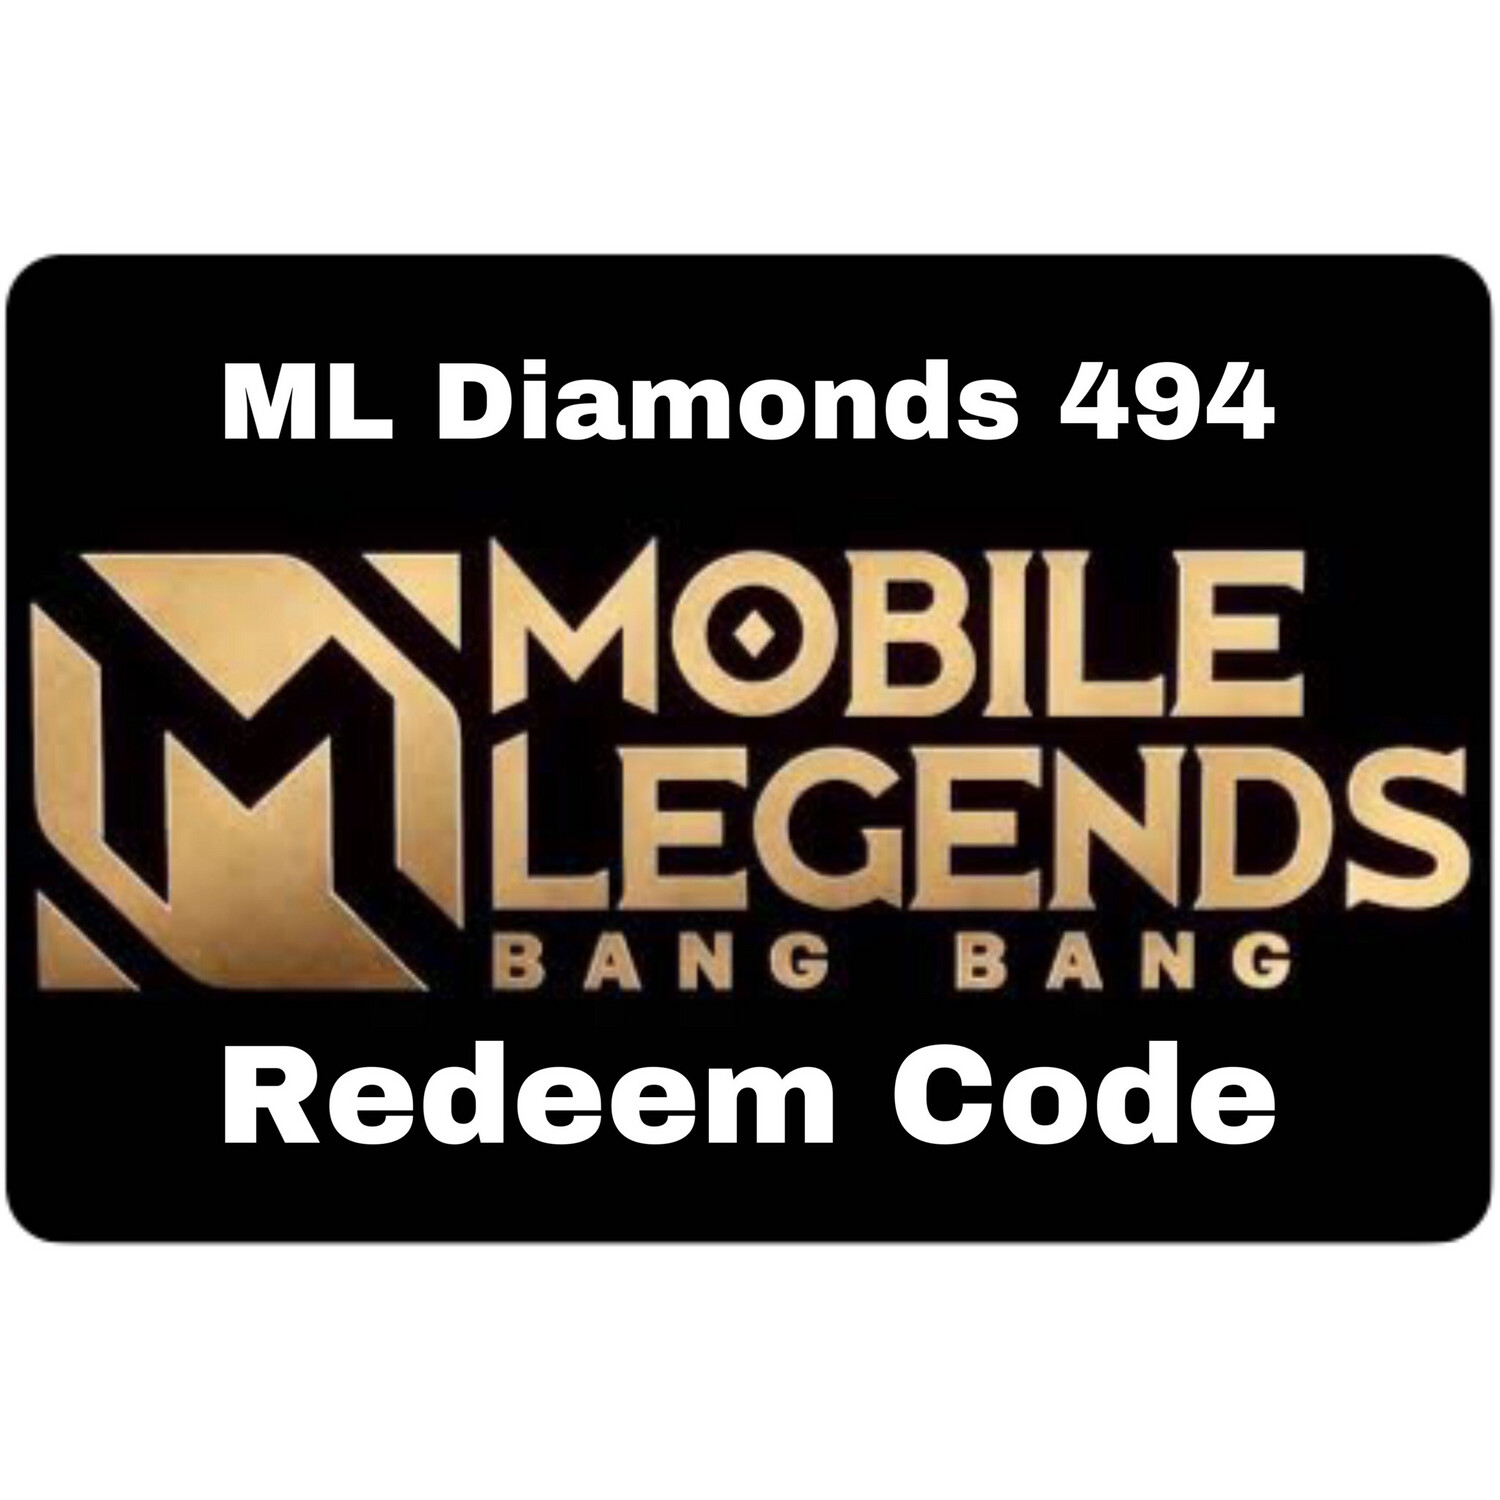 Mobile Legends 494 Diamonds Redeem Code